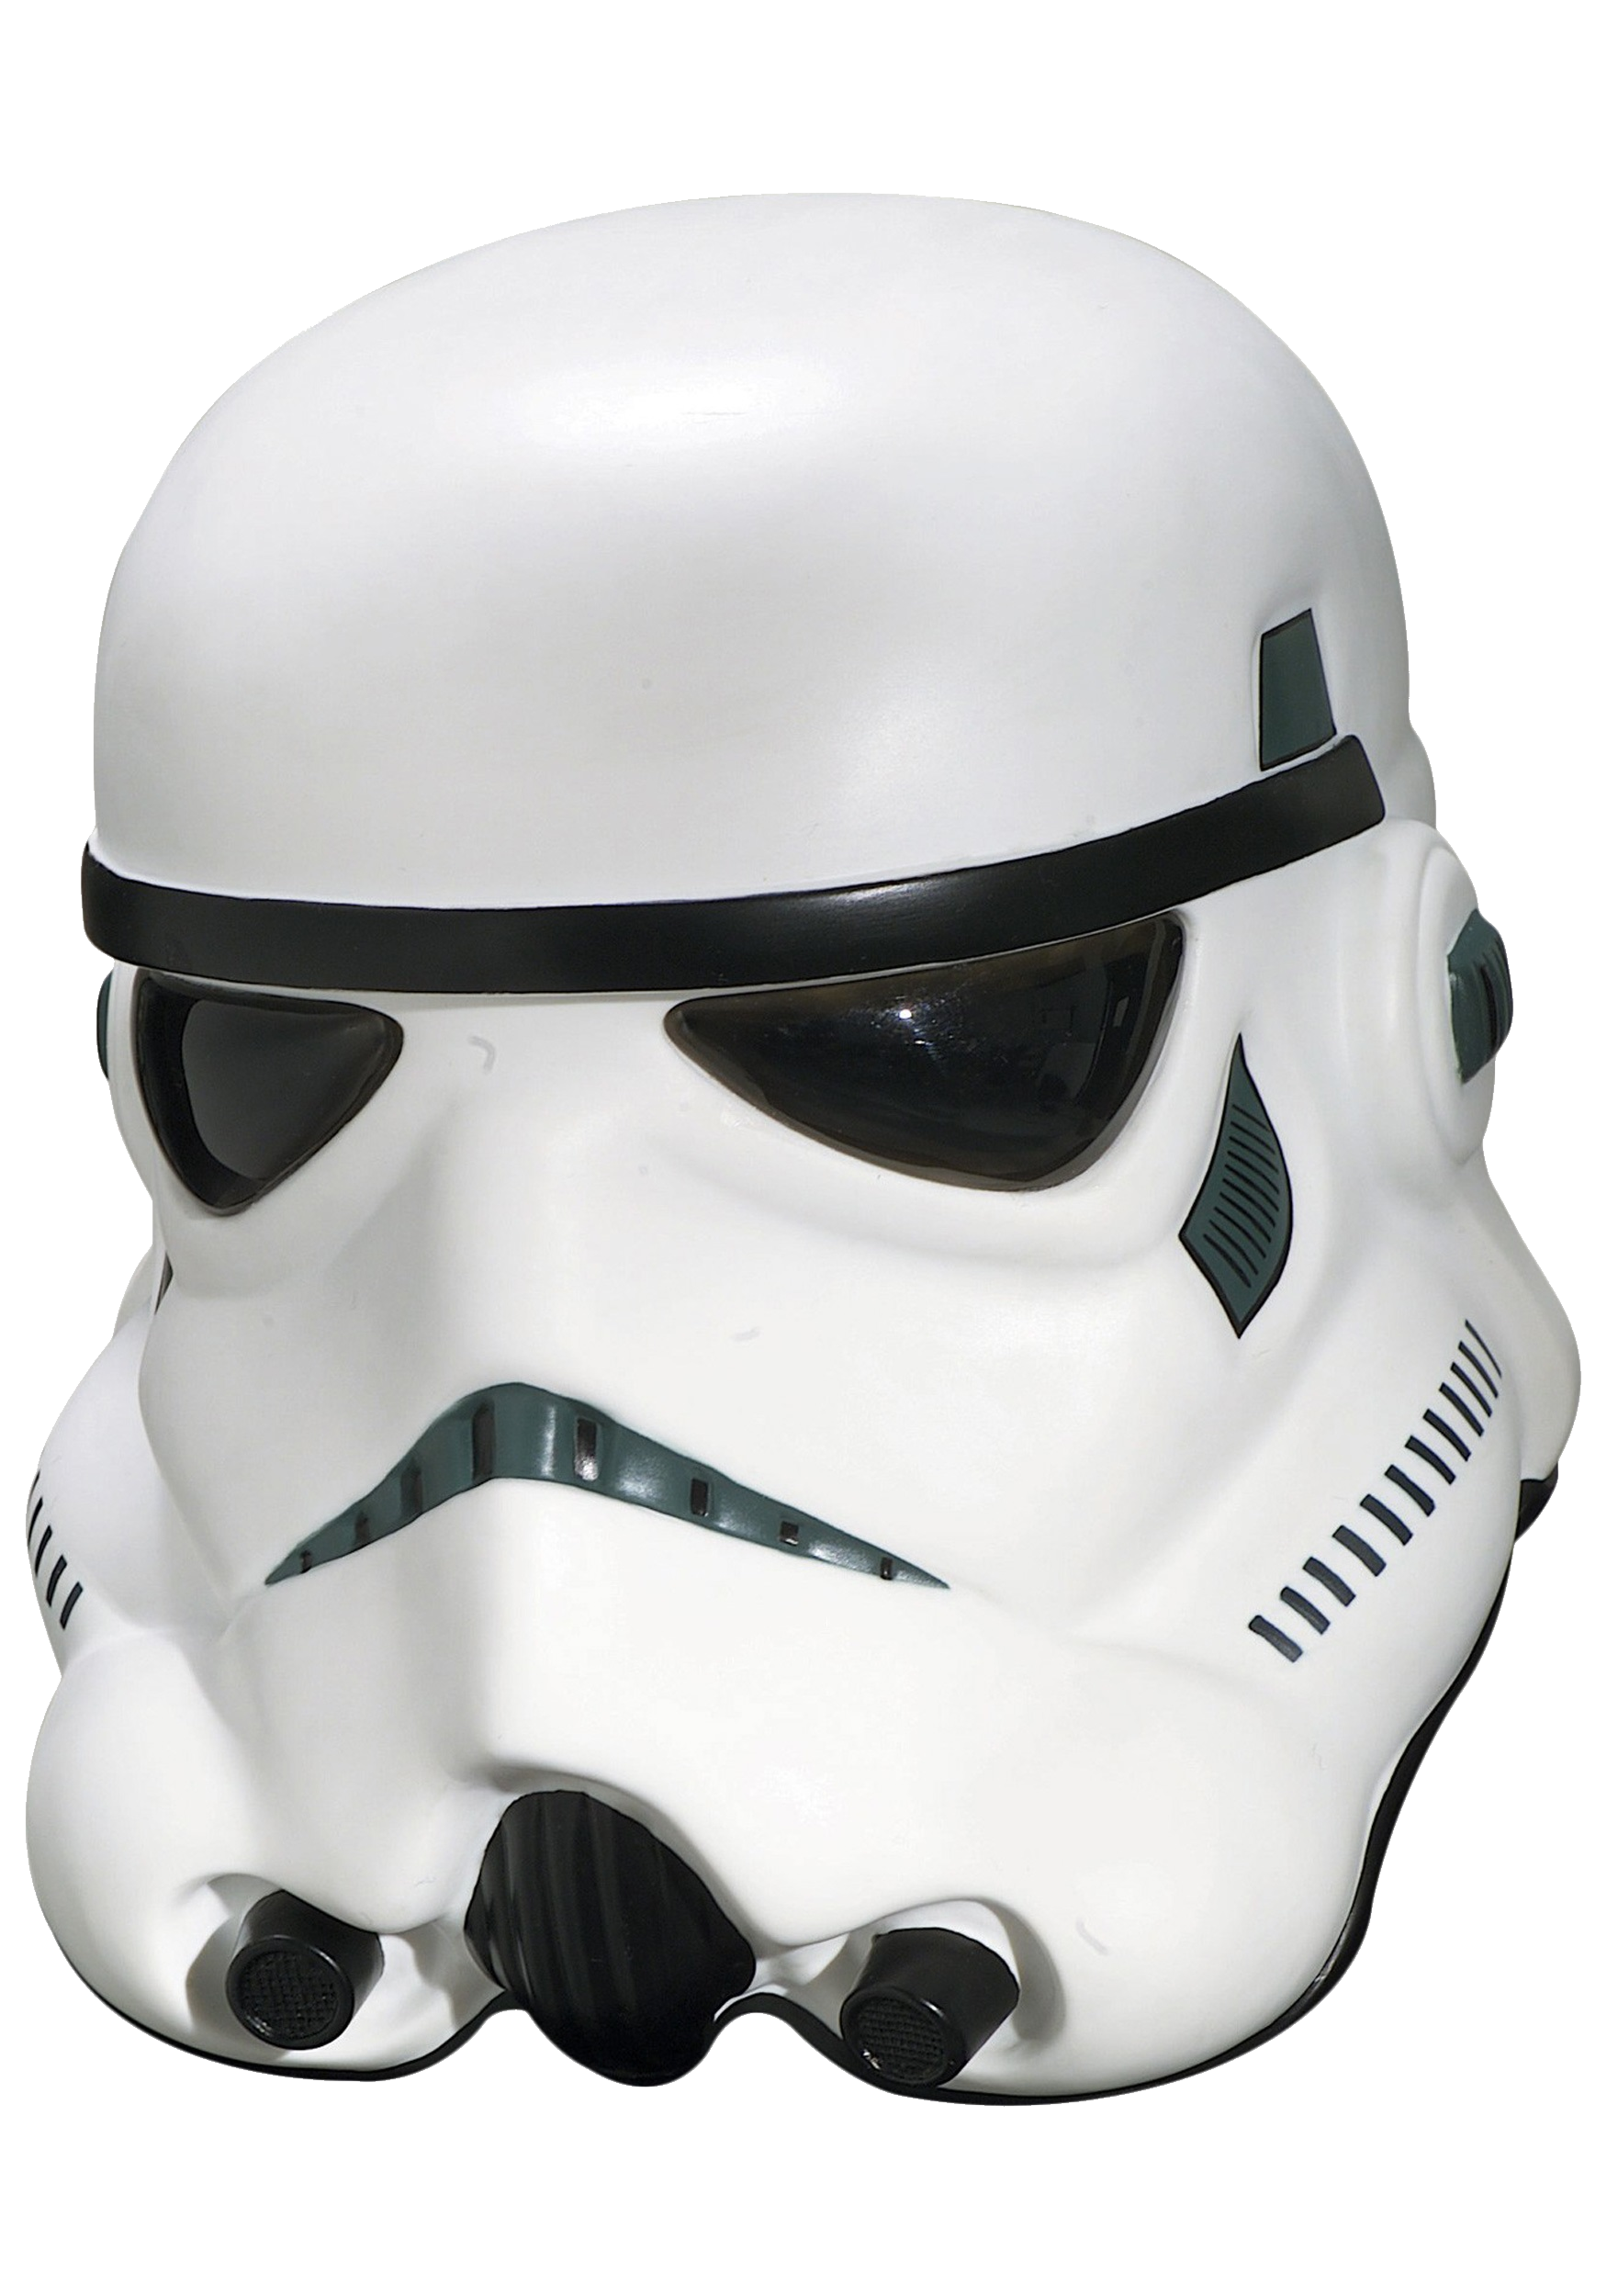 Storm trooper helmet png. Stormtrooper image purepng free